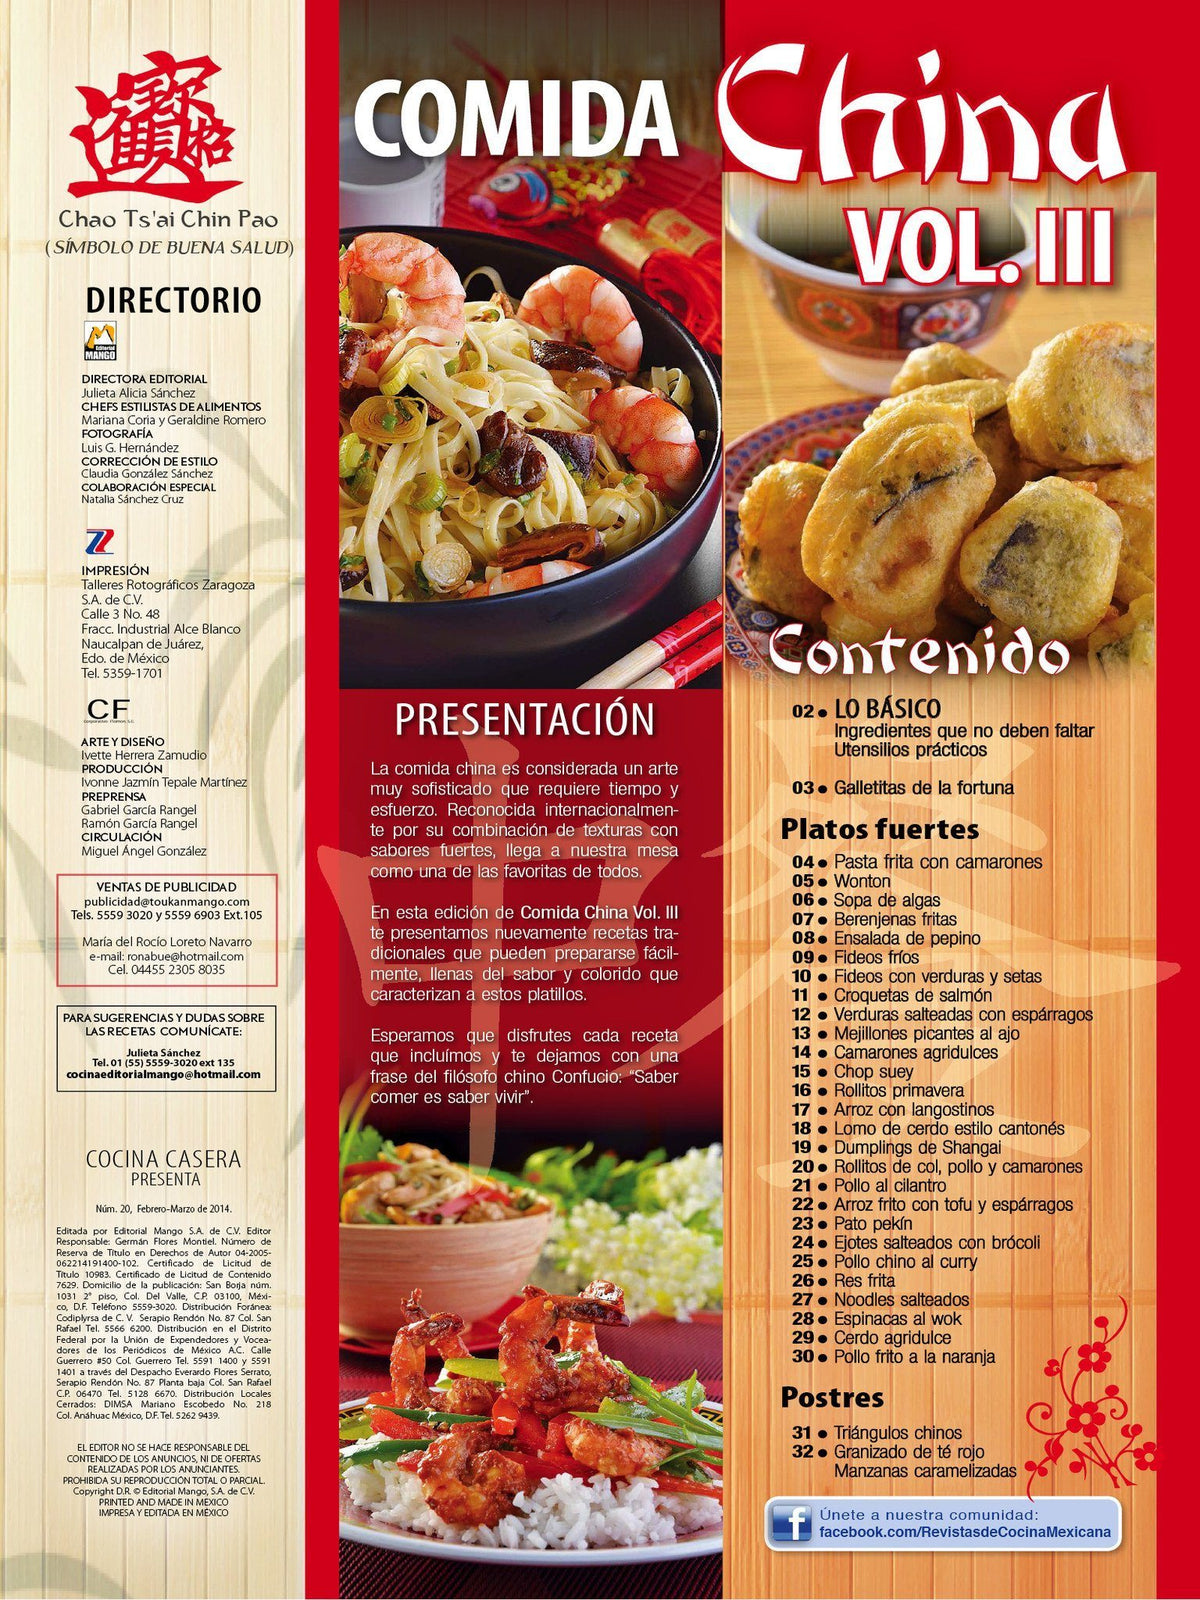 Cocina Casera Presenta 20 - Comida china VOL III - Formato Digital - ToukanMango